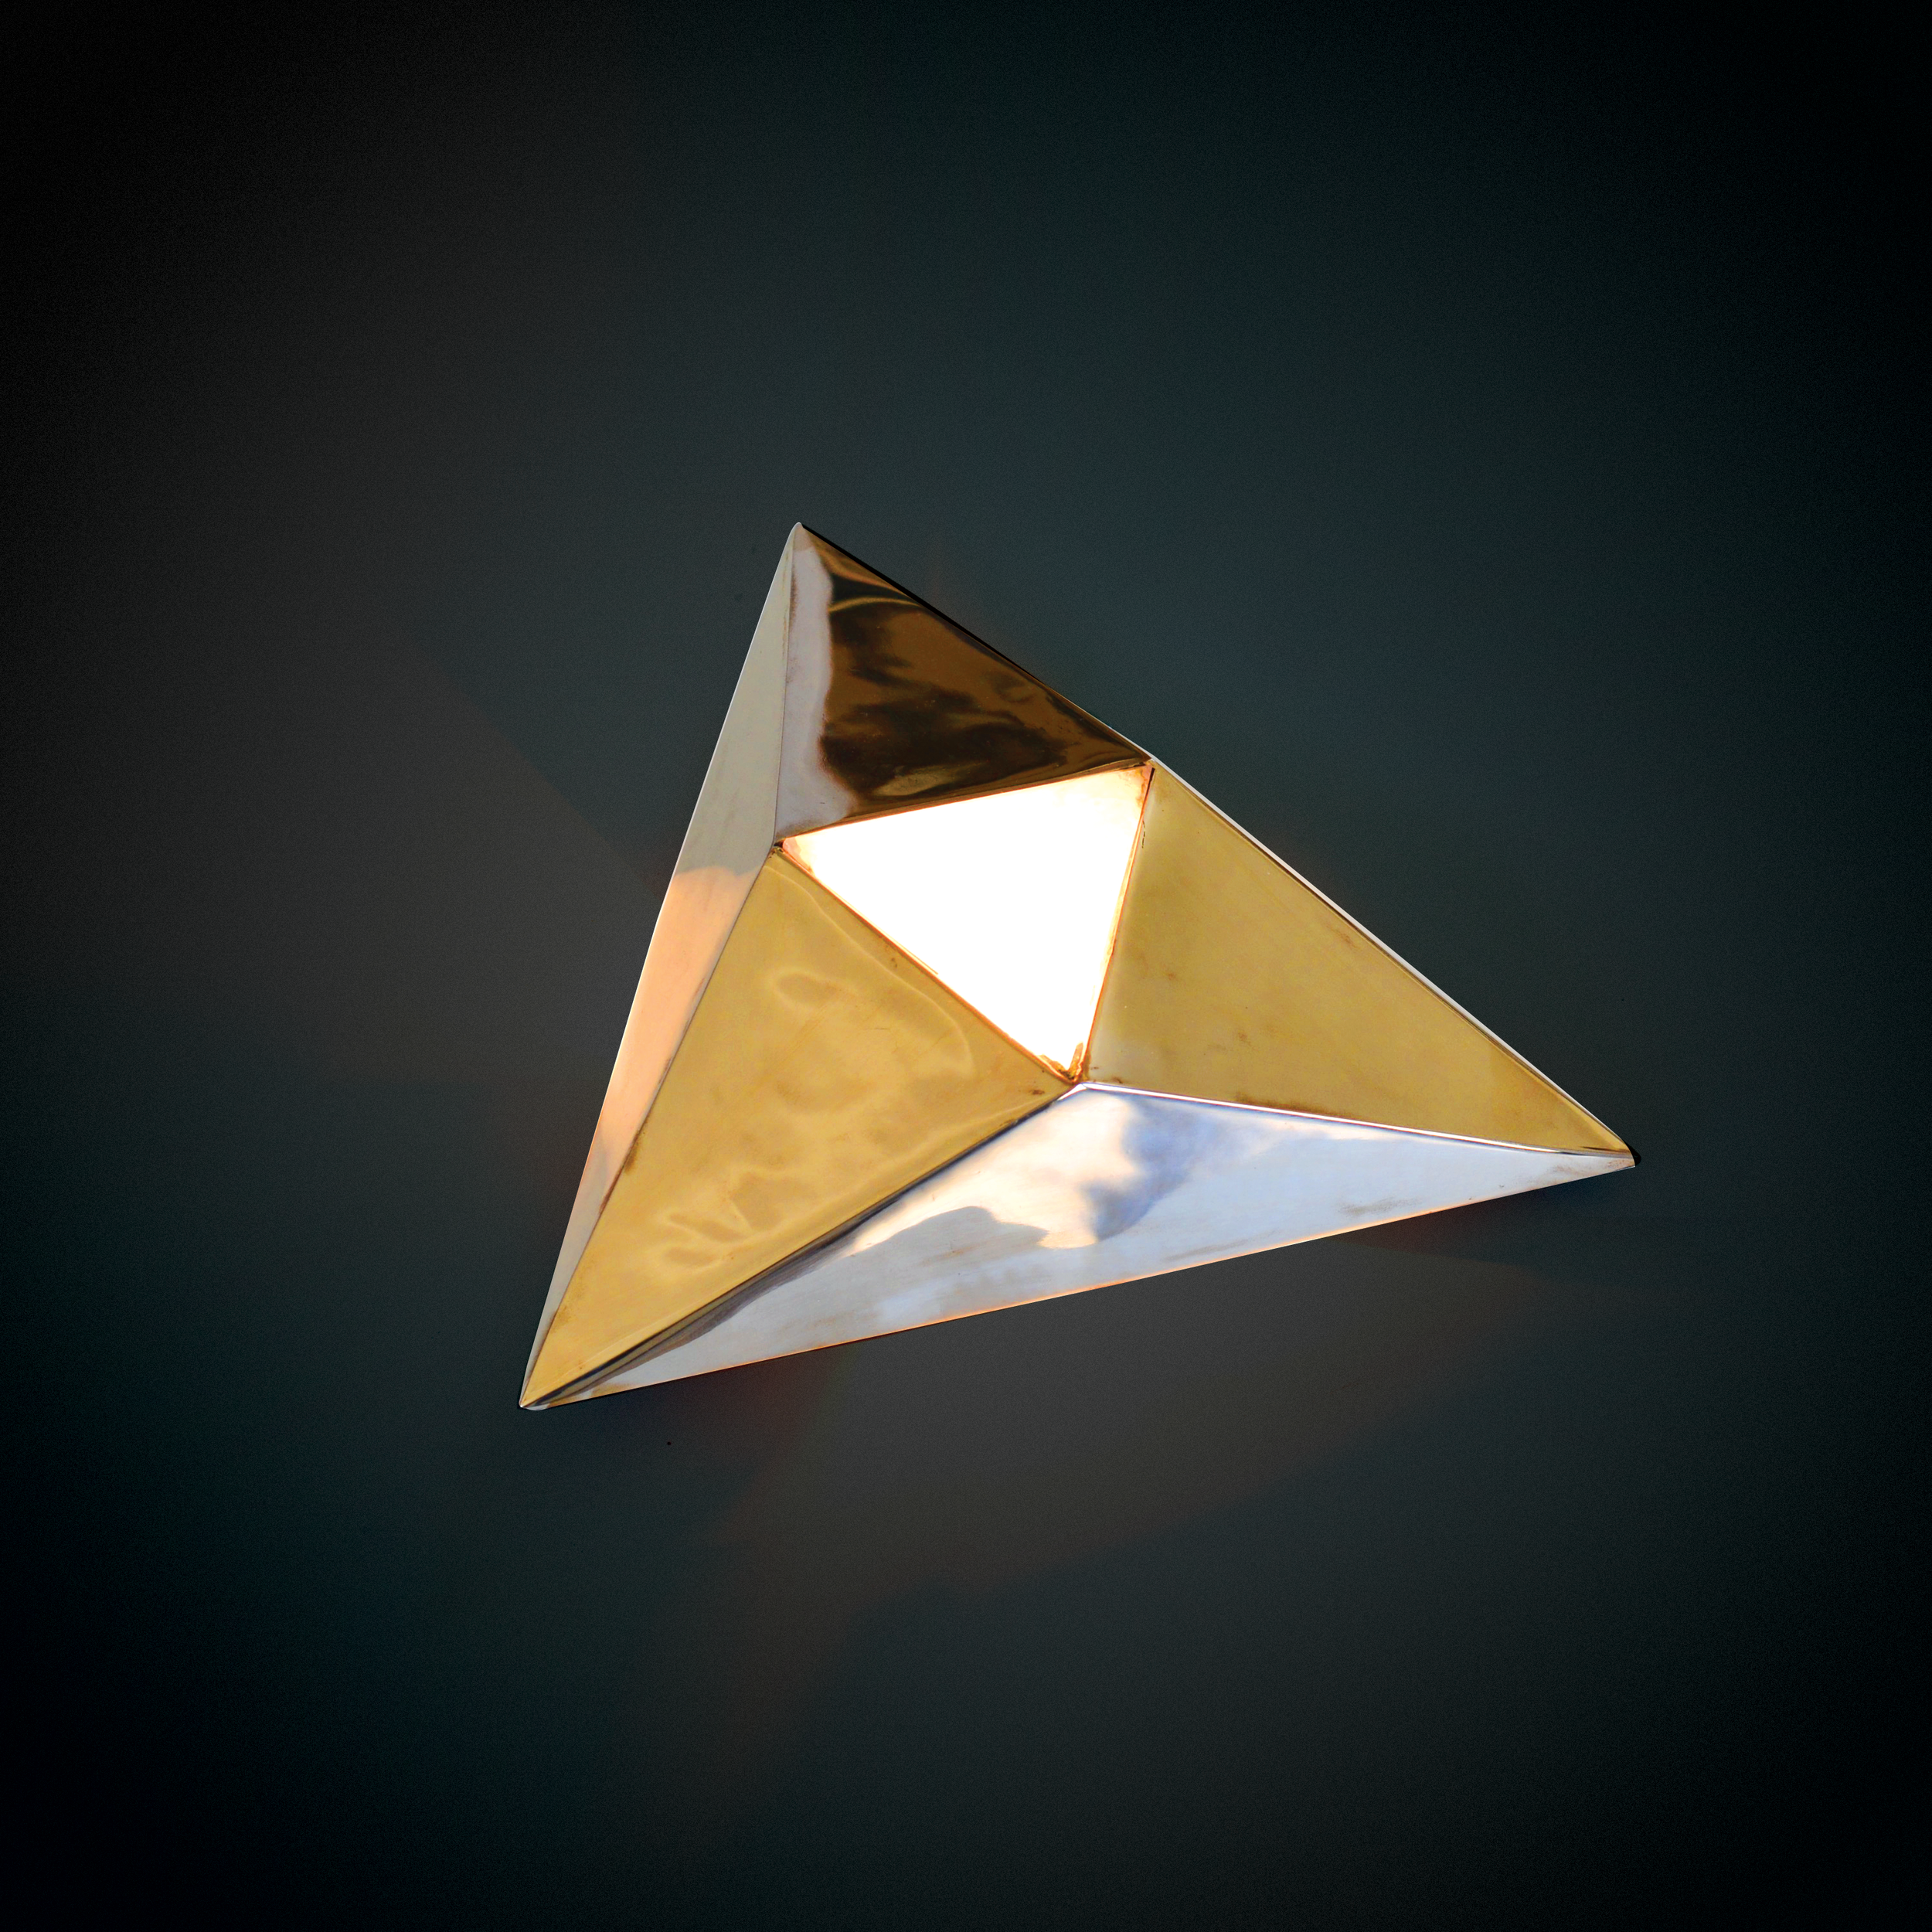 PLATONIC SOLIDS_Tetrahedron.png